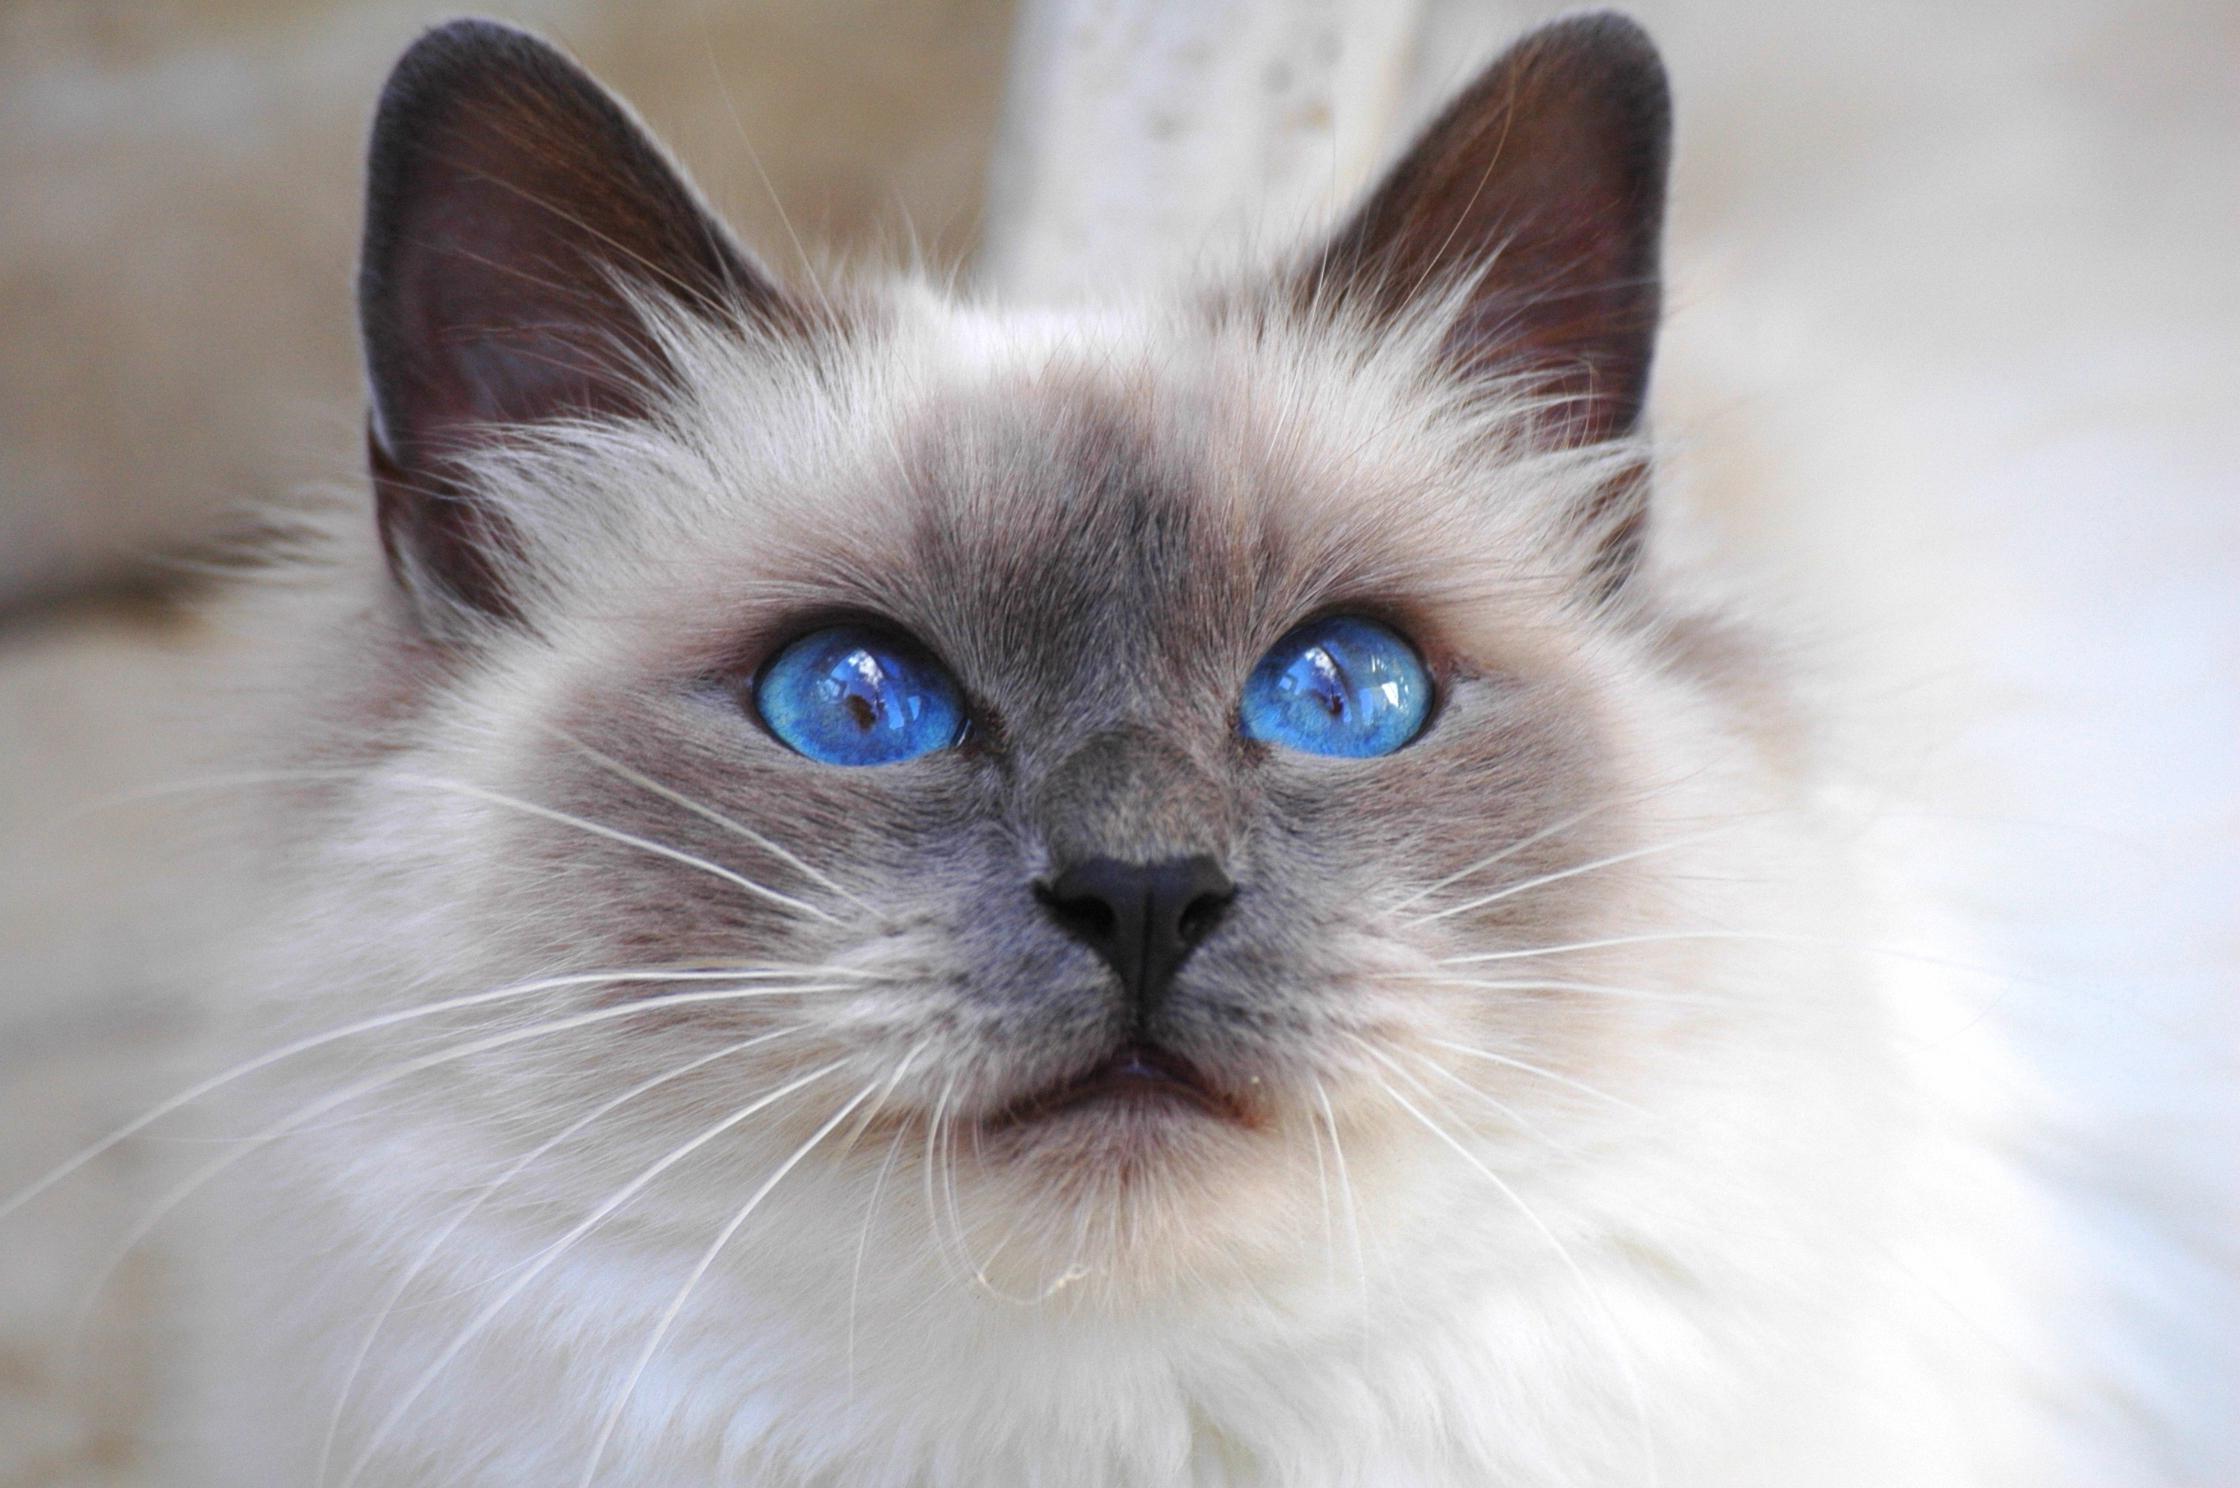 cats, animal, cat, blue eyes, eye, face, fluffy, gray